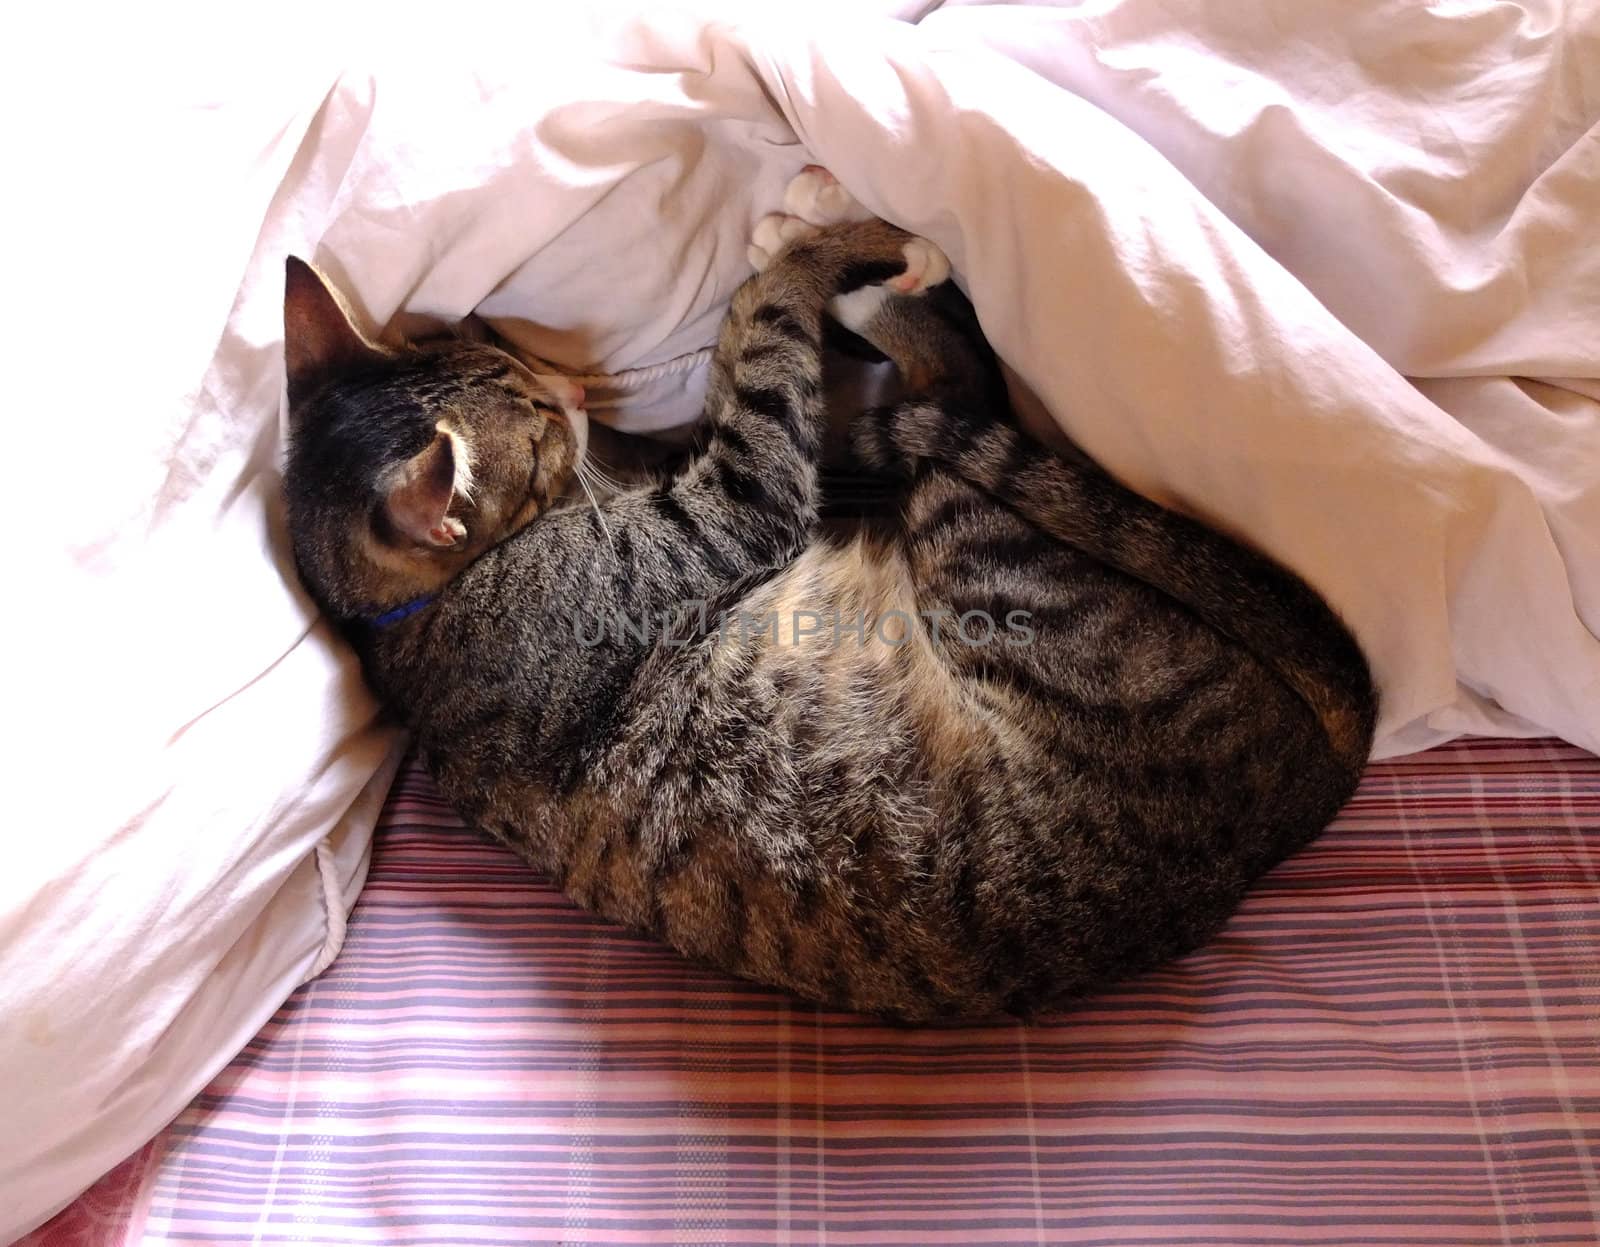 Cat sleeping in bed with duvet.